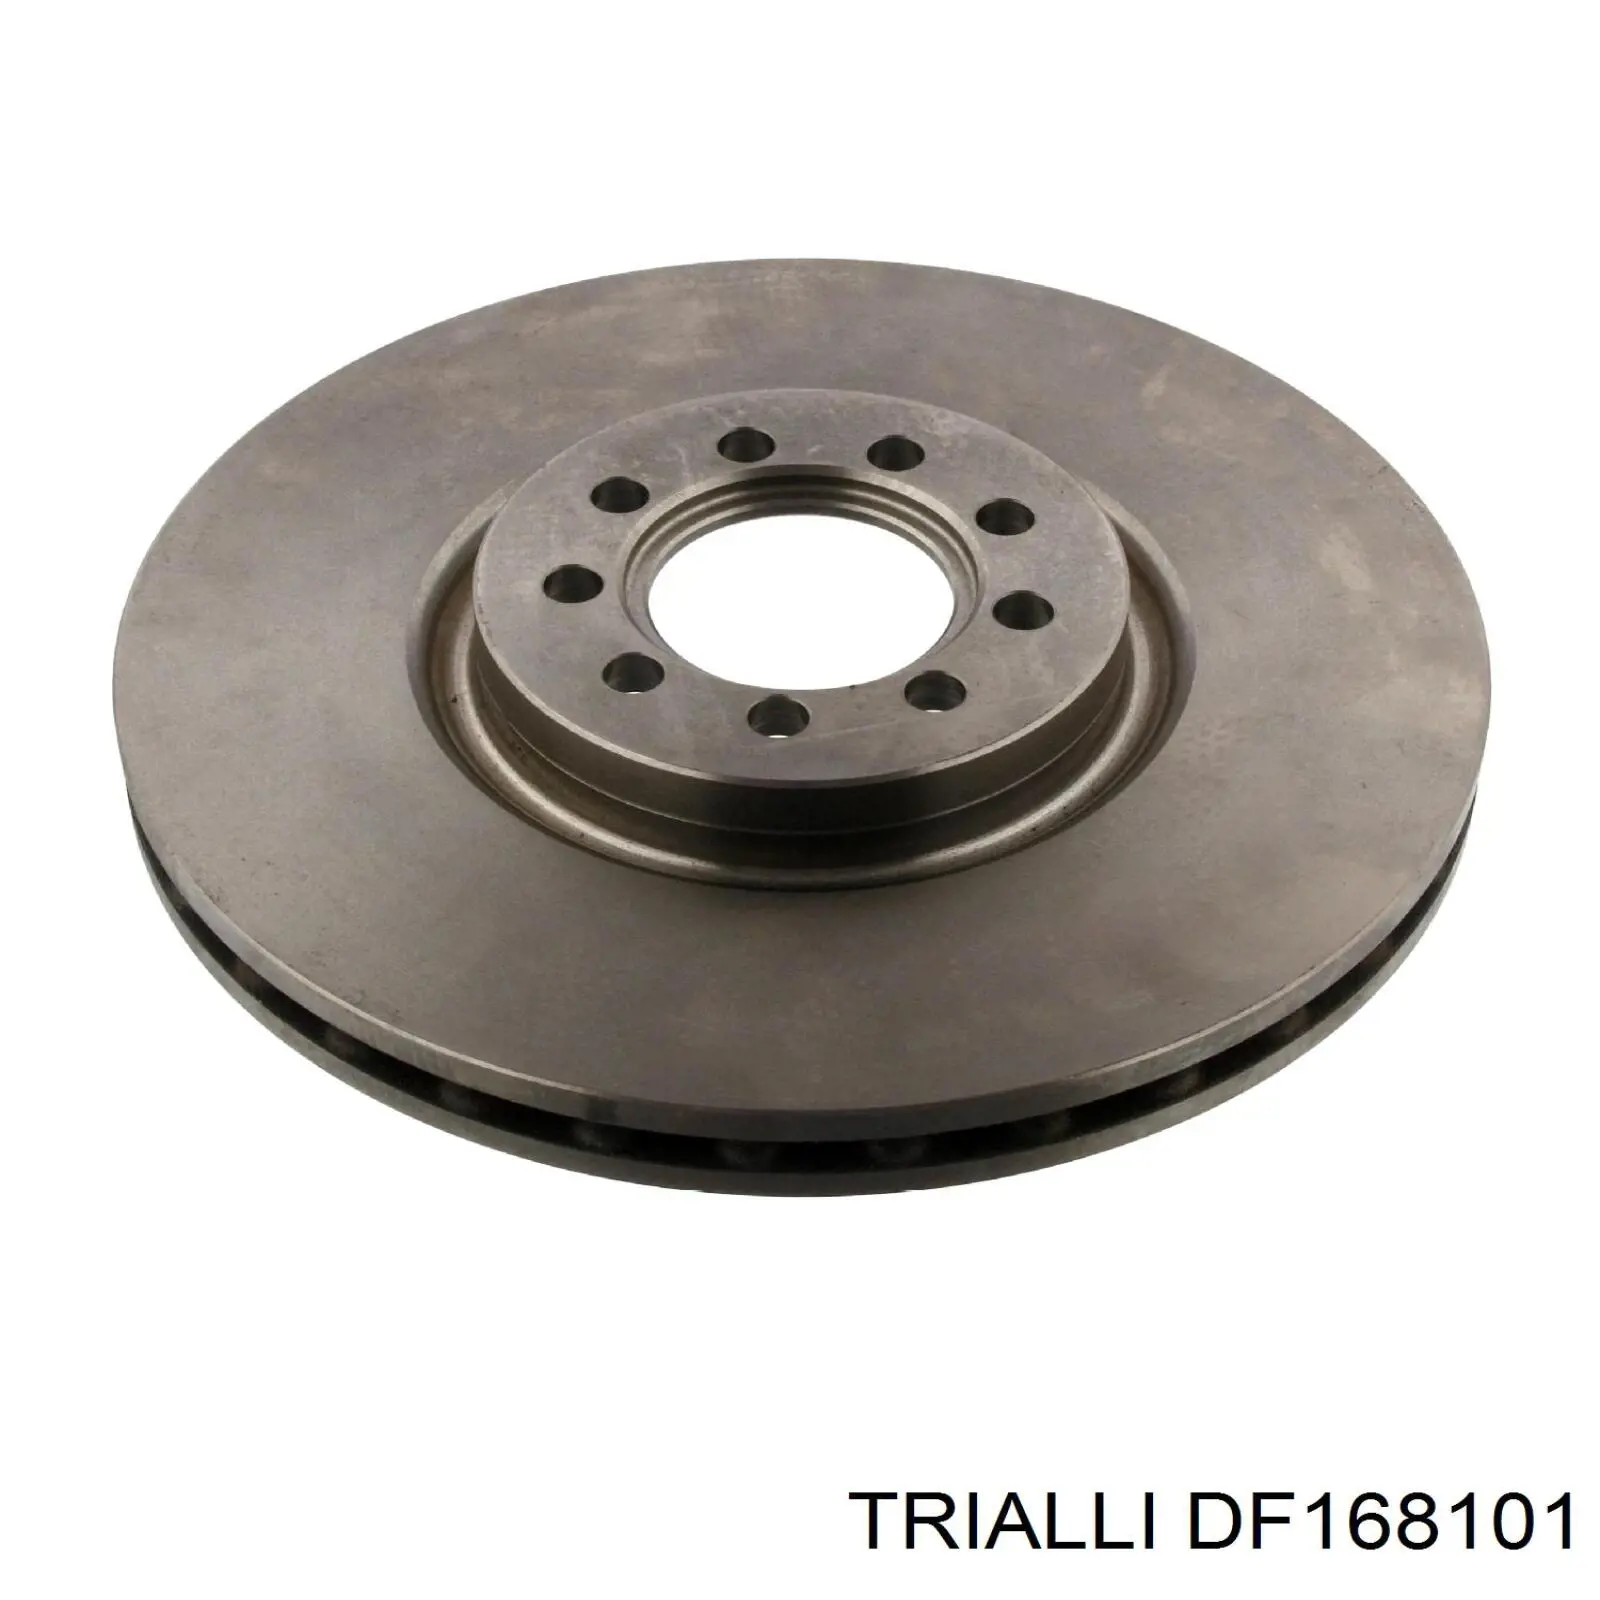 DF168101 Trialli disco do freio dianteiro